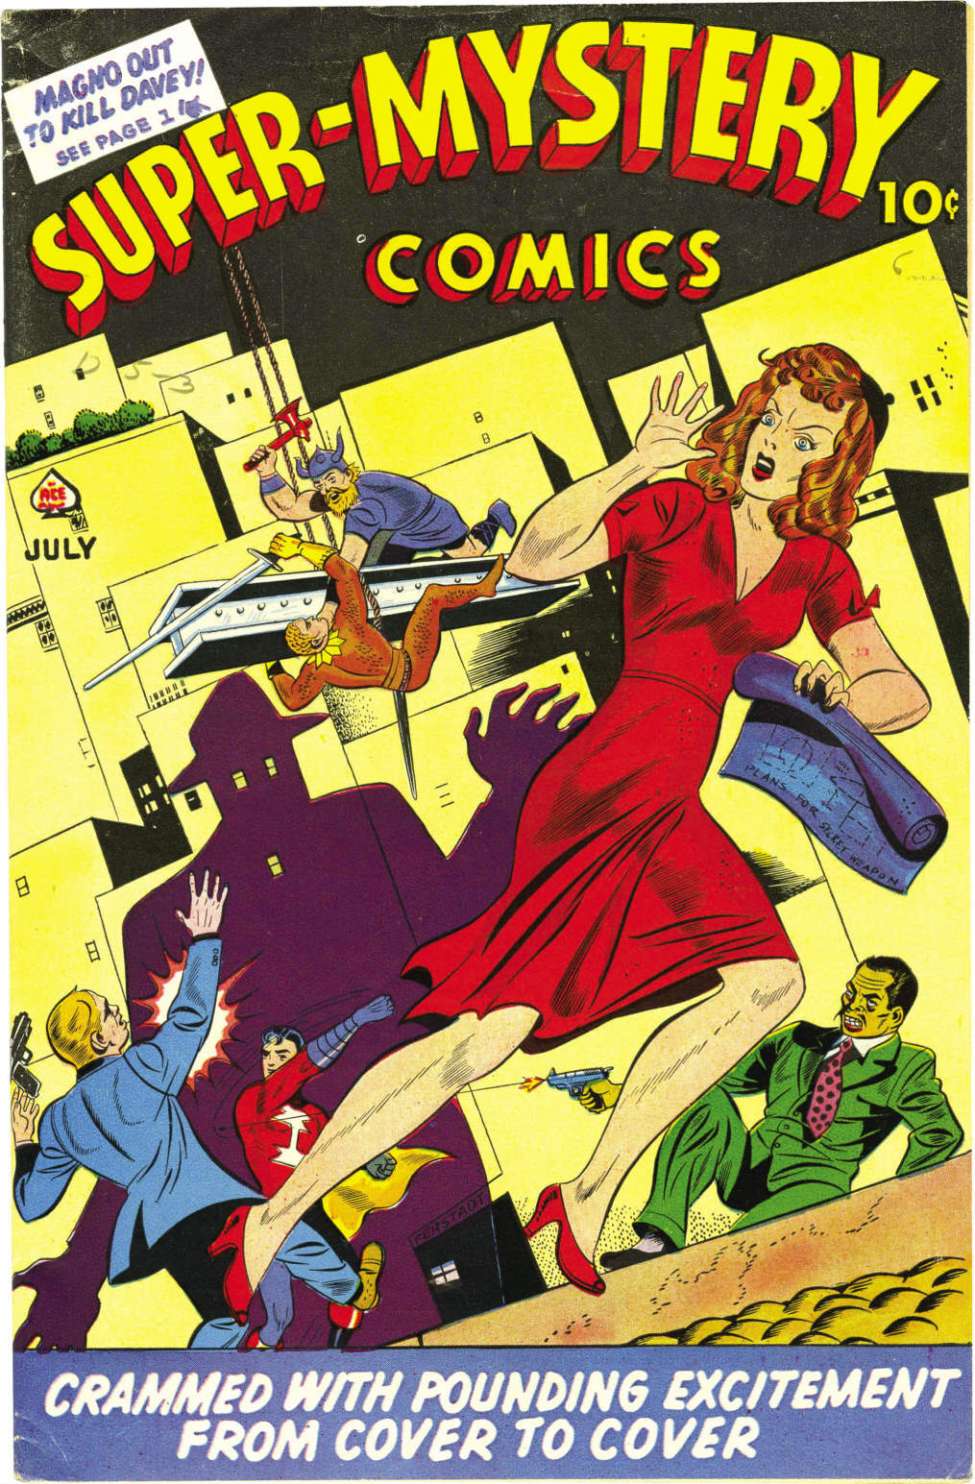 Book Cover For Super-Mystery Comics v4 3 - Version 1